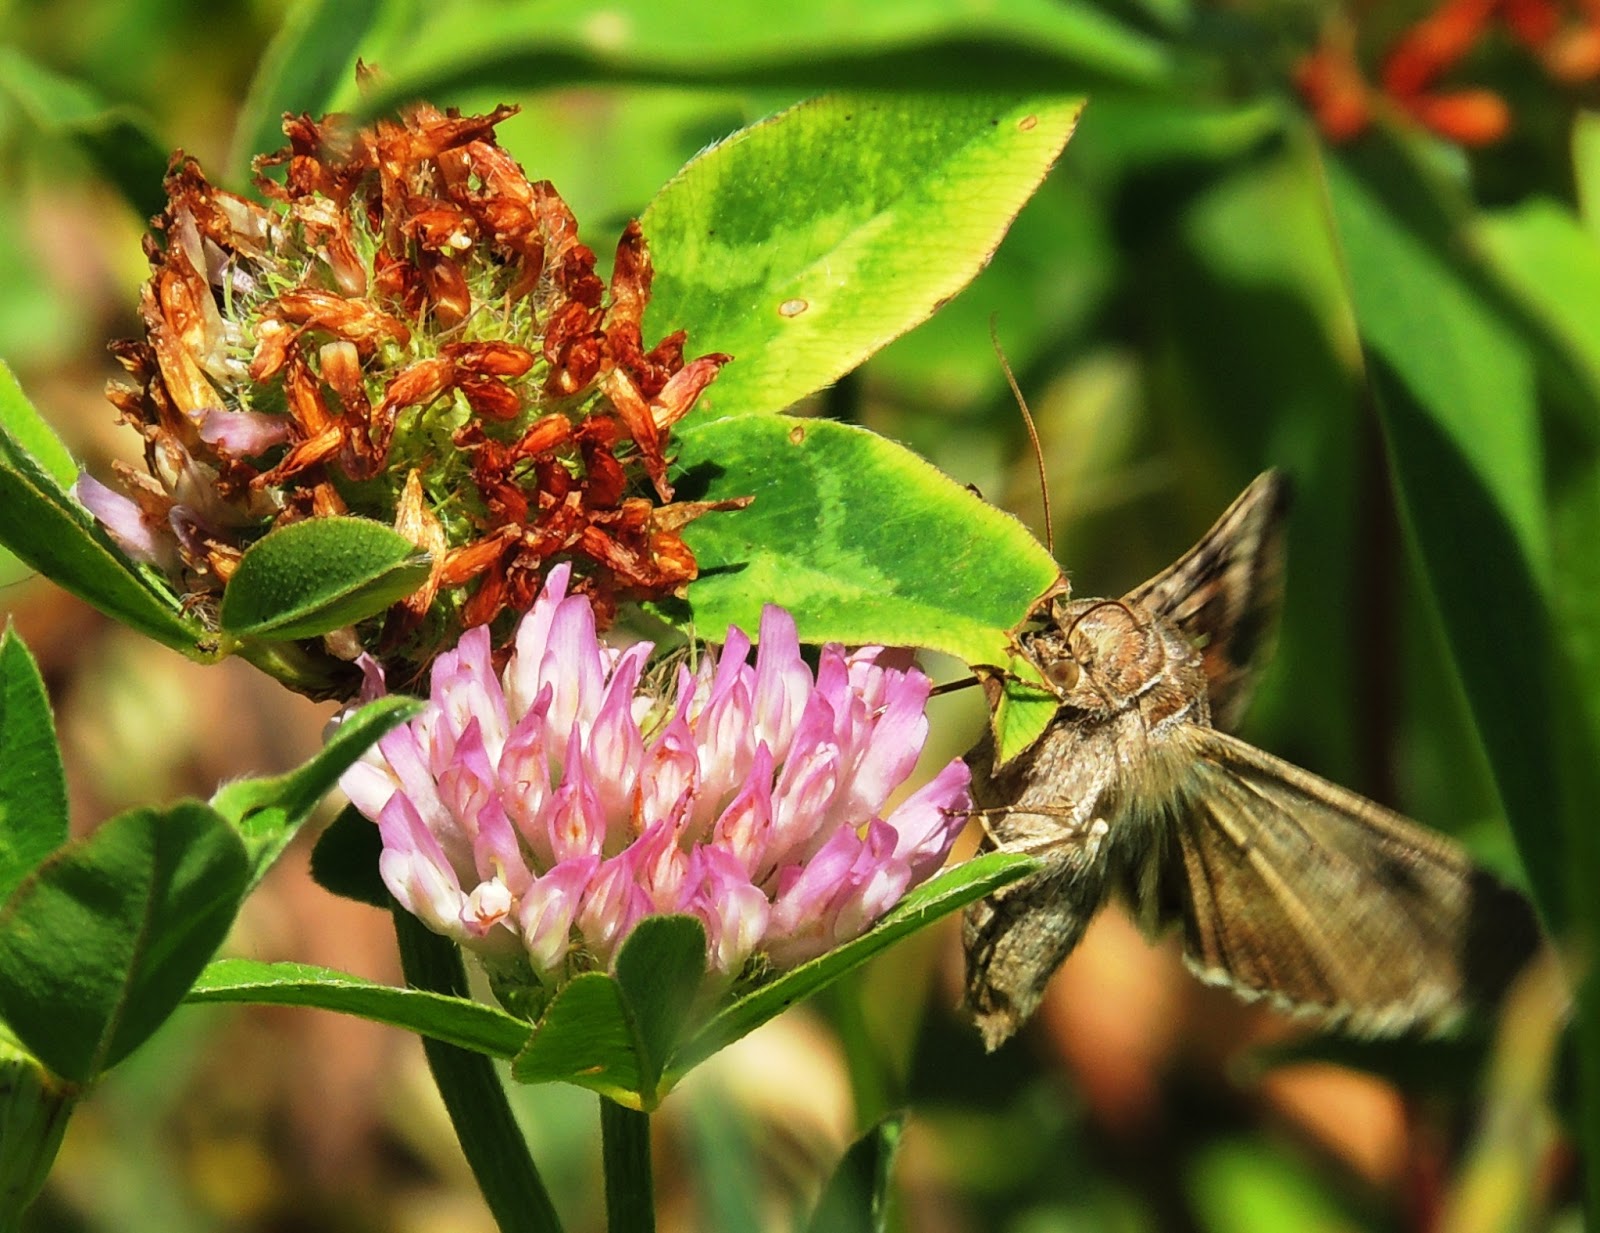 La mariposa libando néctar